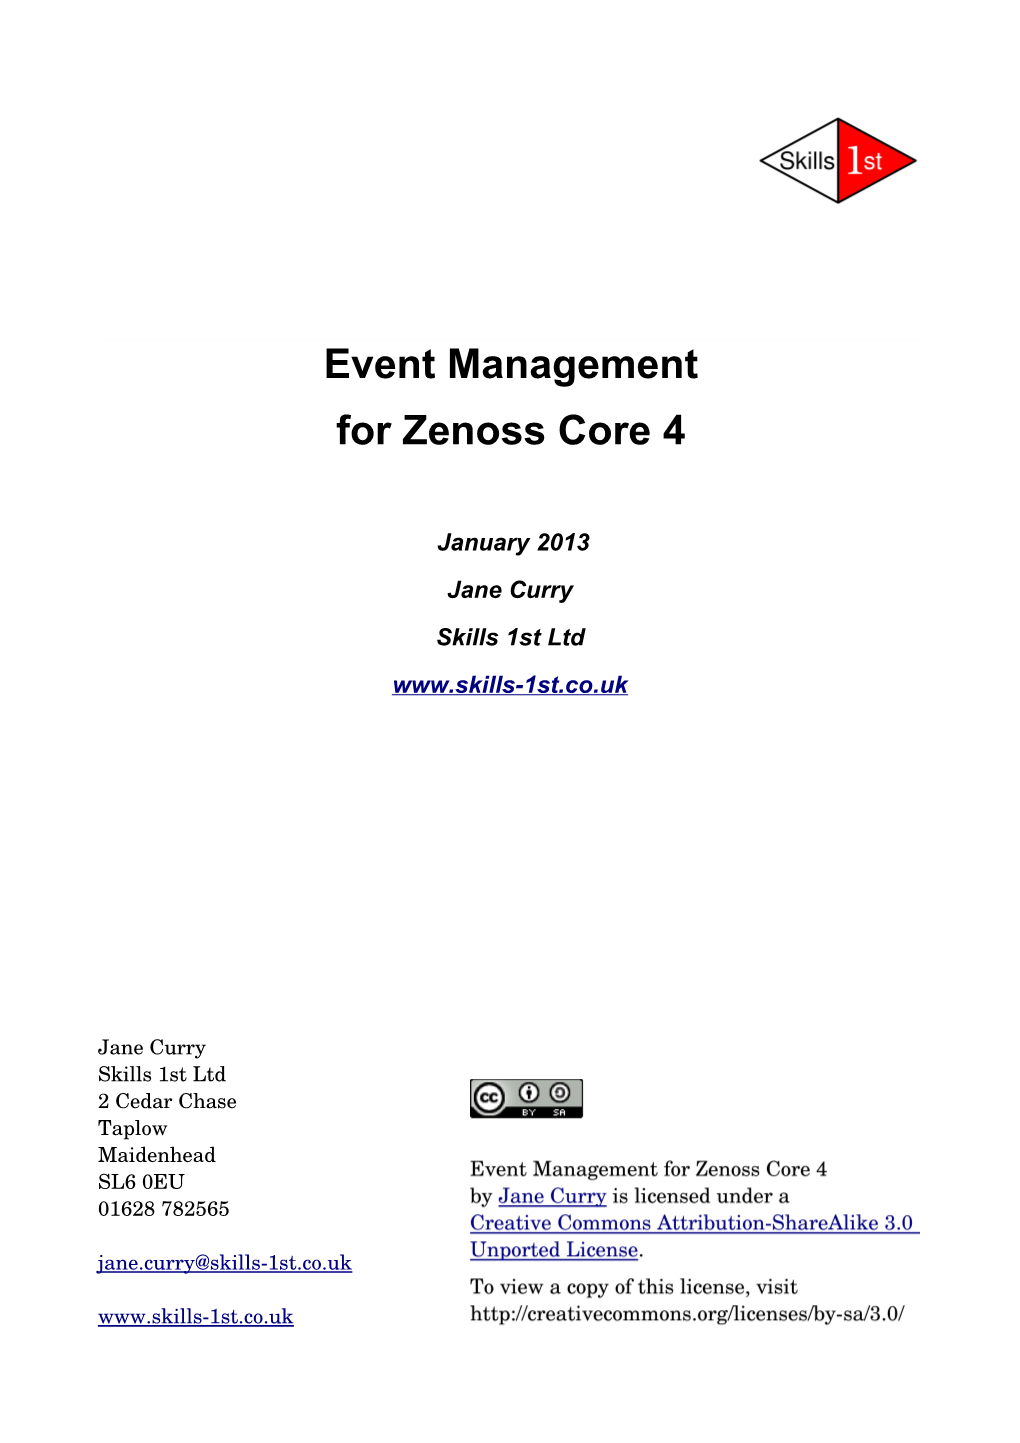 Event Management for Zenoss Core 4